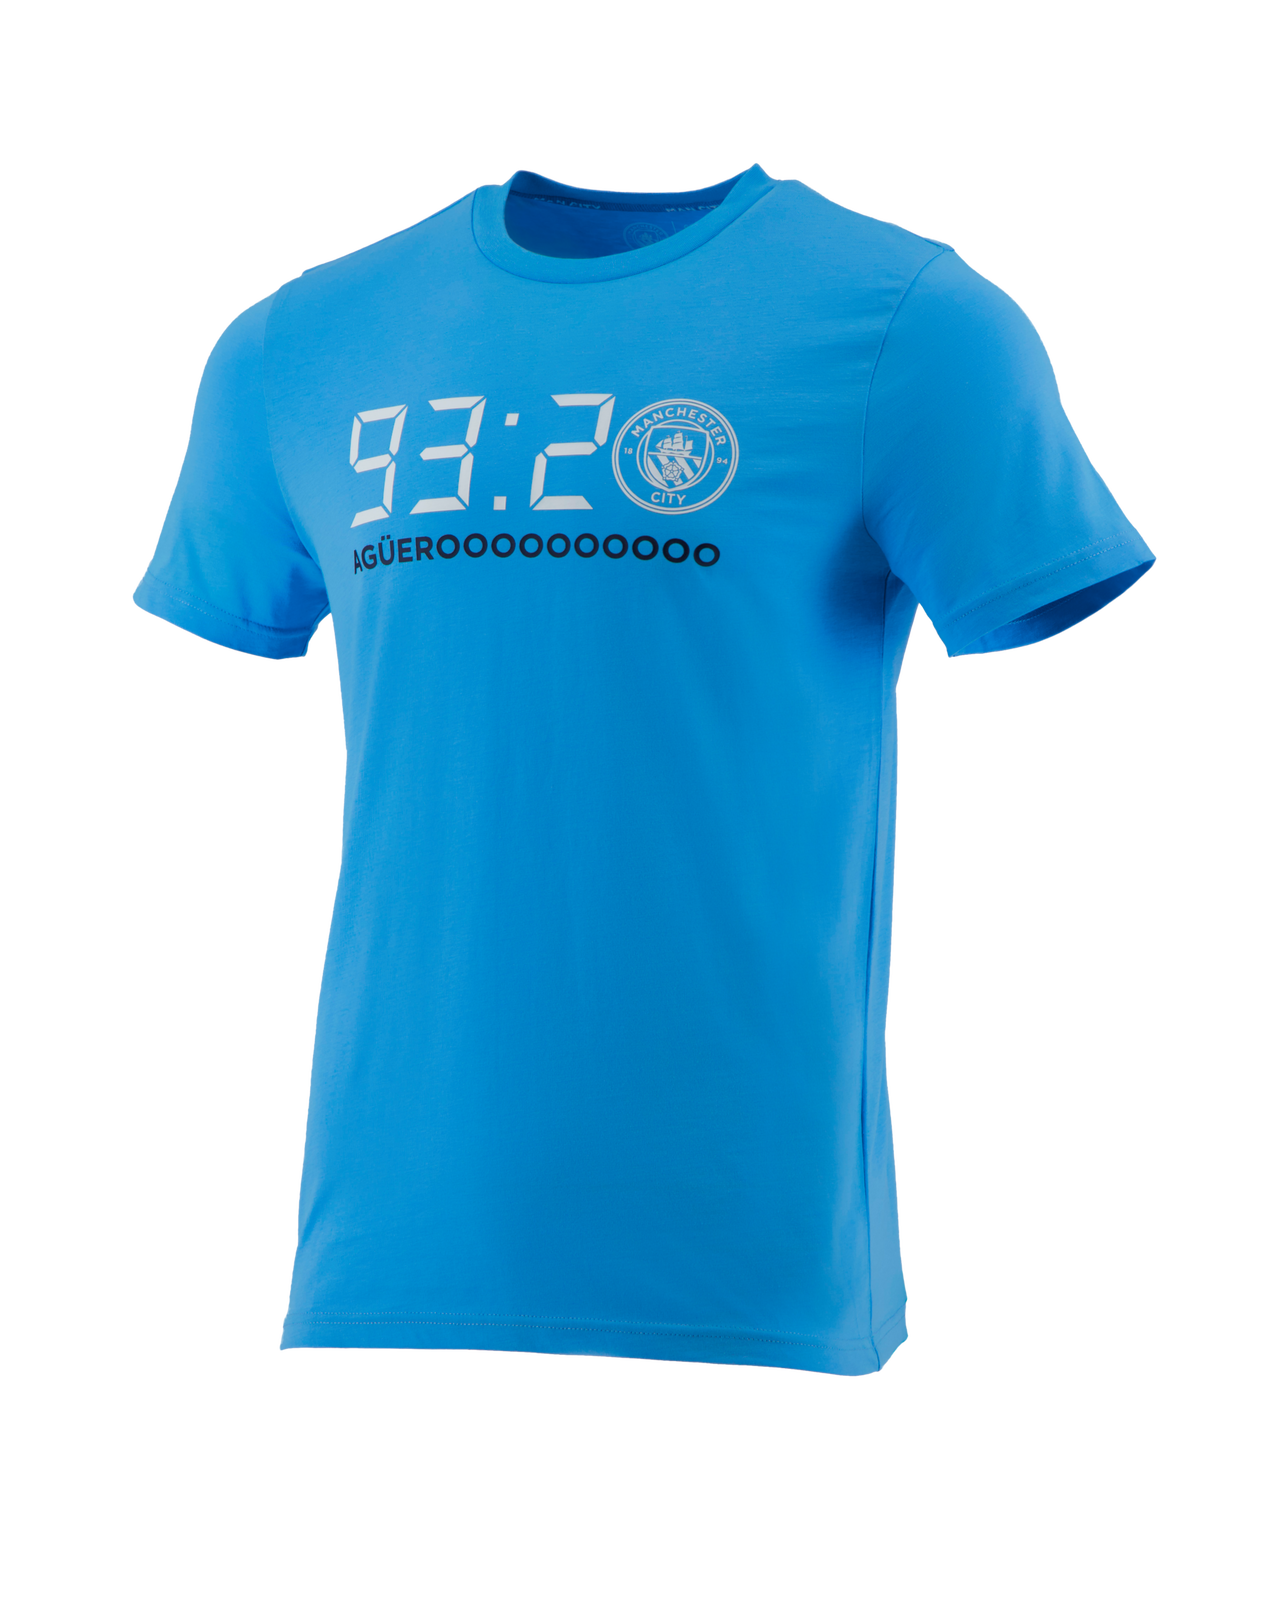 Camiseta Manchester City 93:20 Agüero